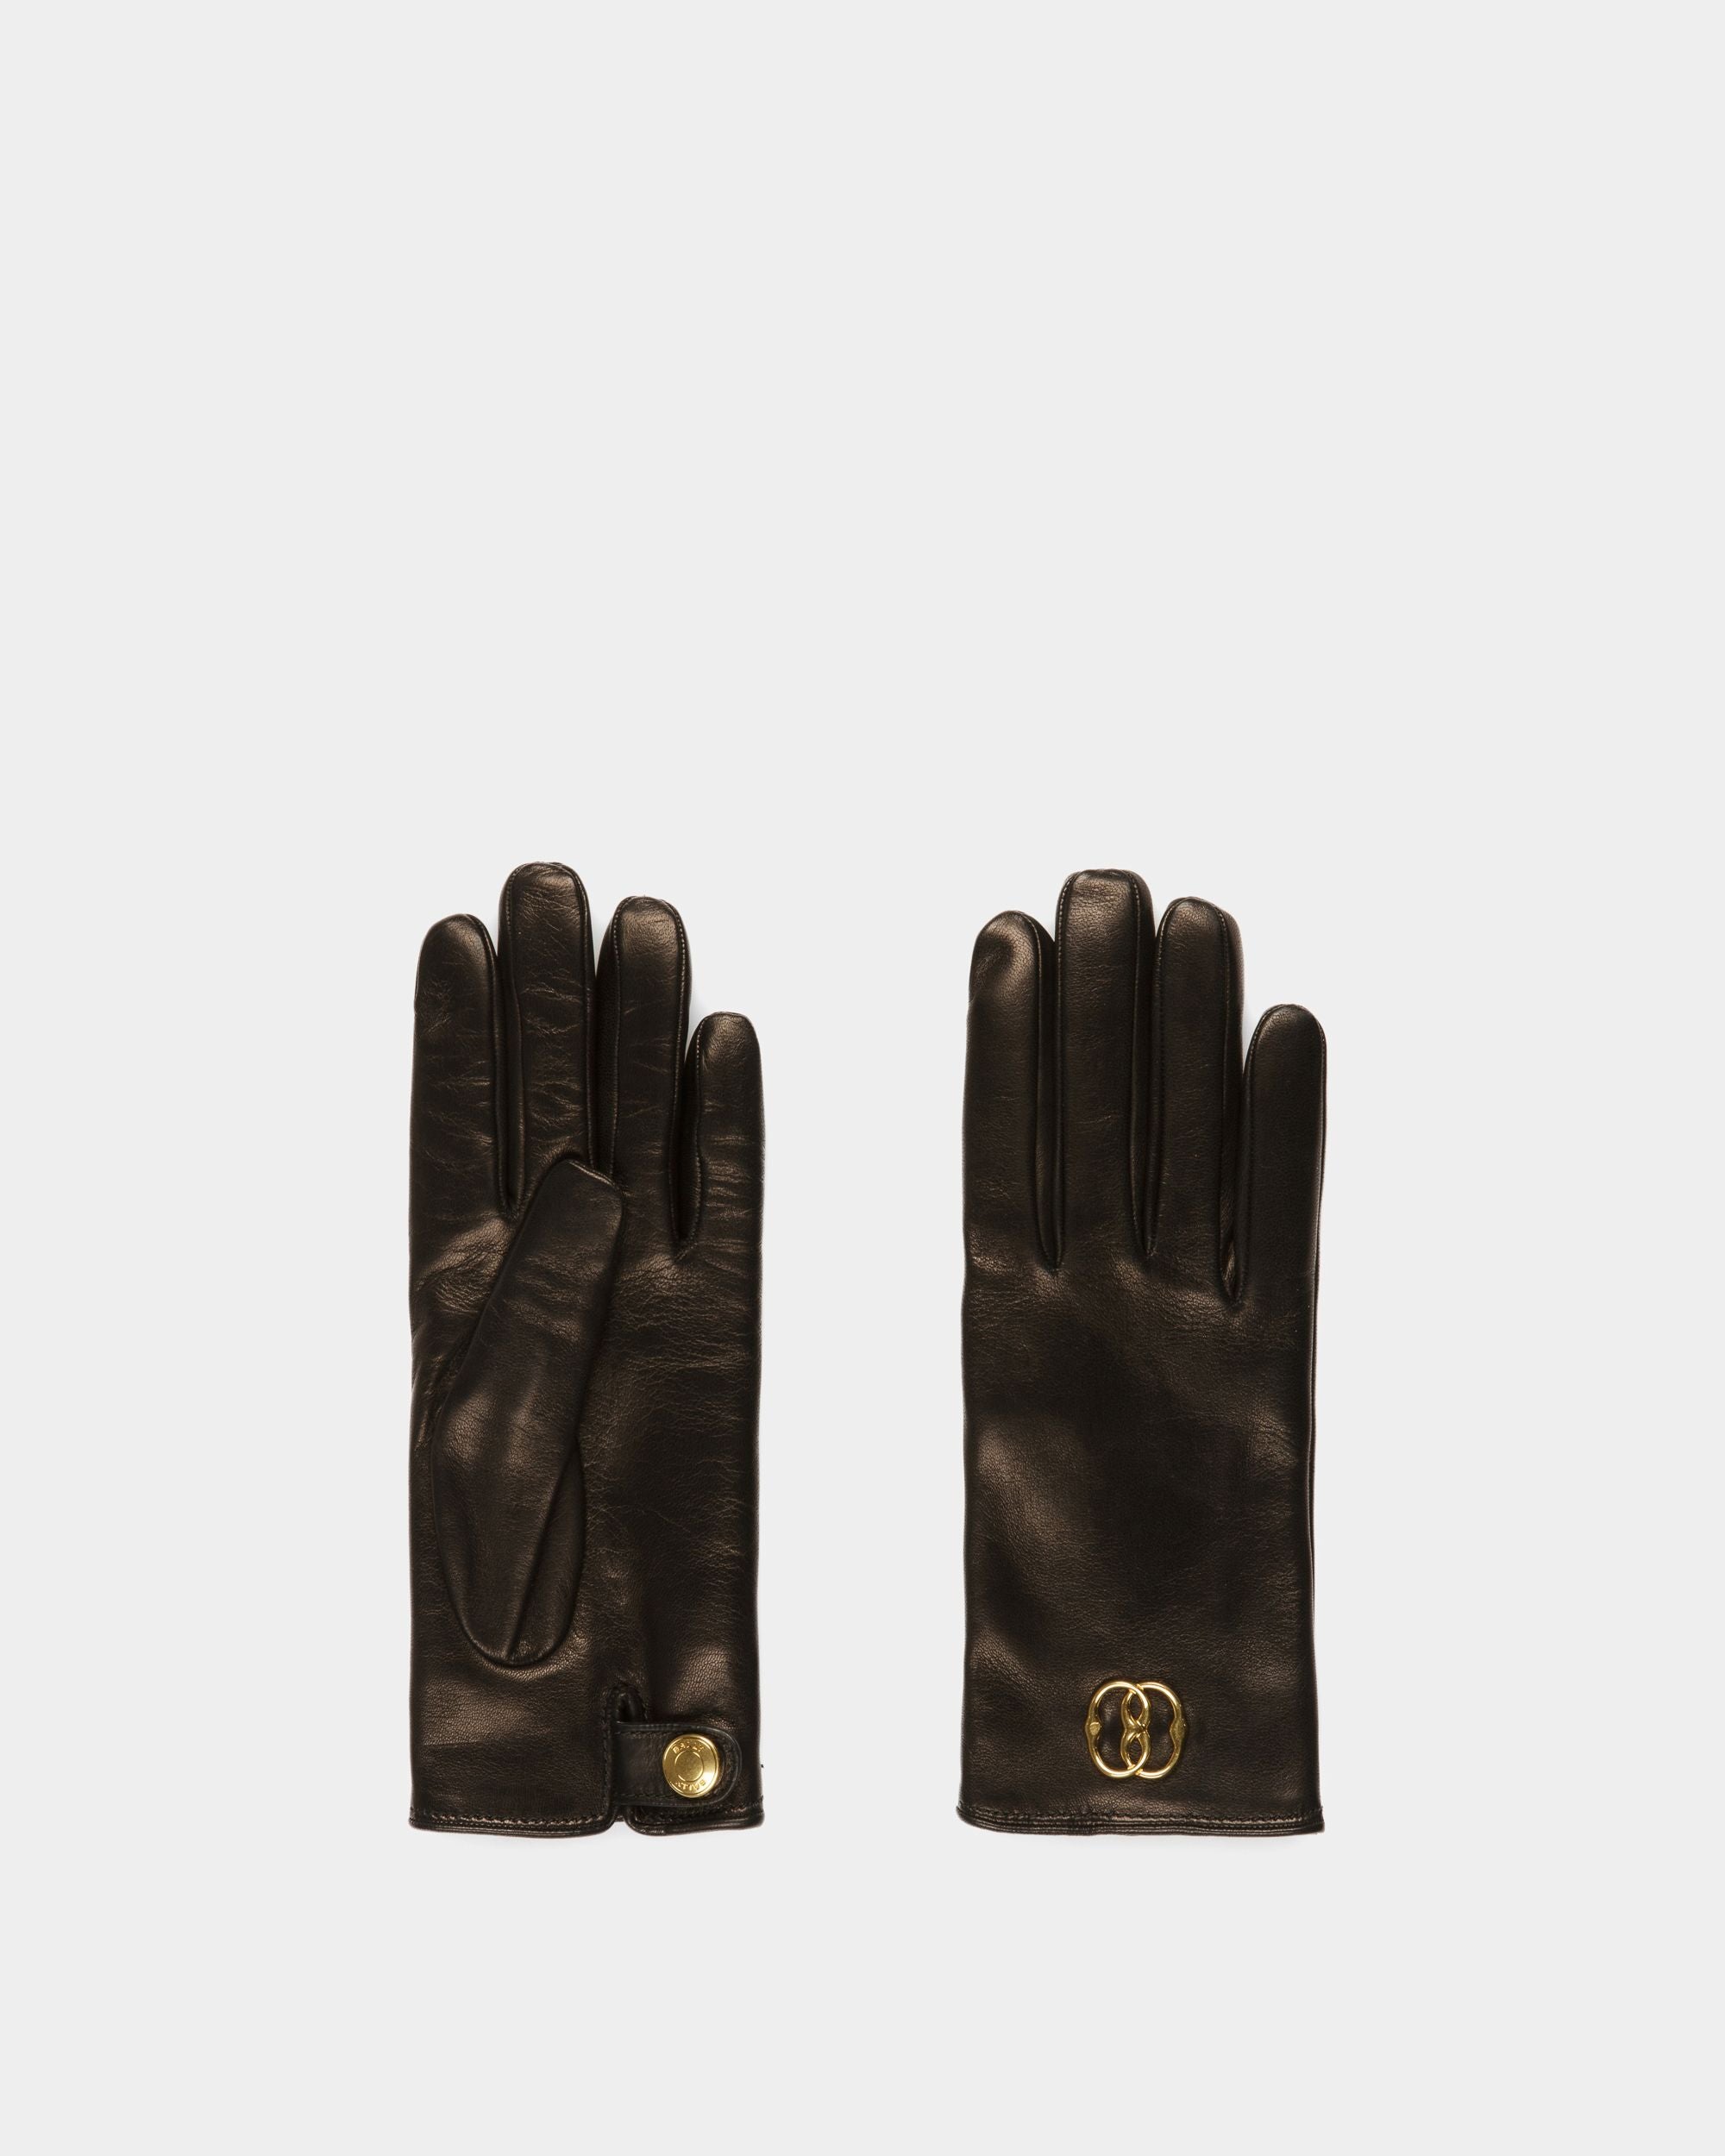 Emblem Gloves | Women's Gloves | Black Leather | Bally | Still Life Top